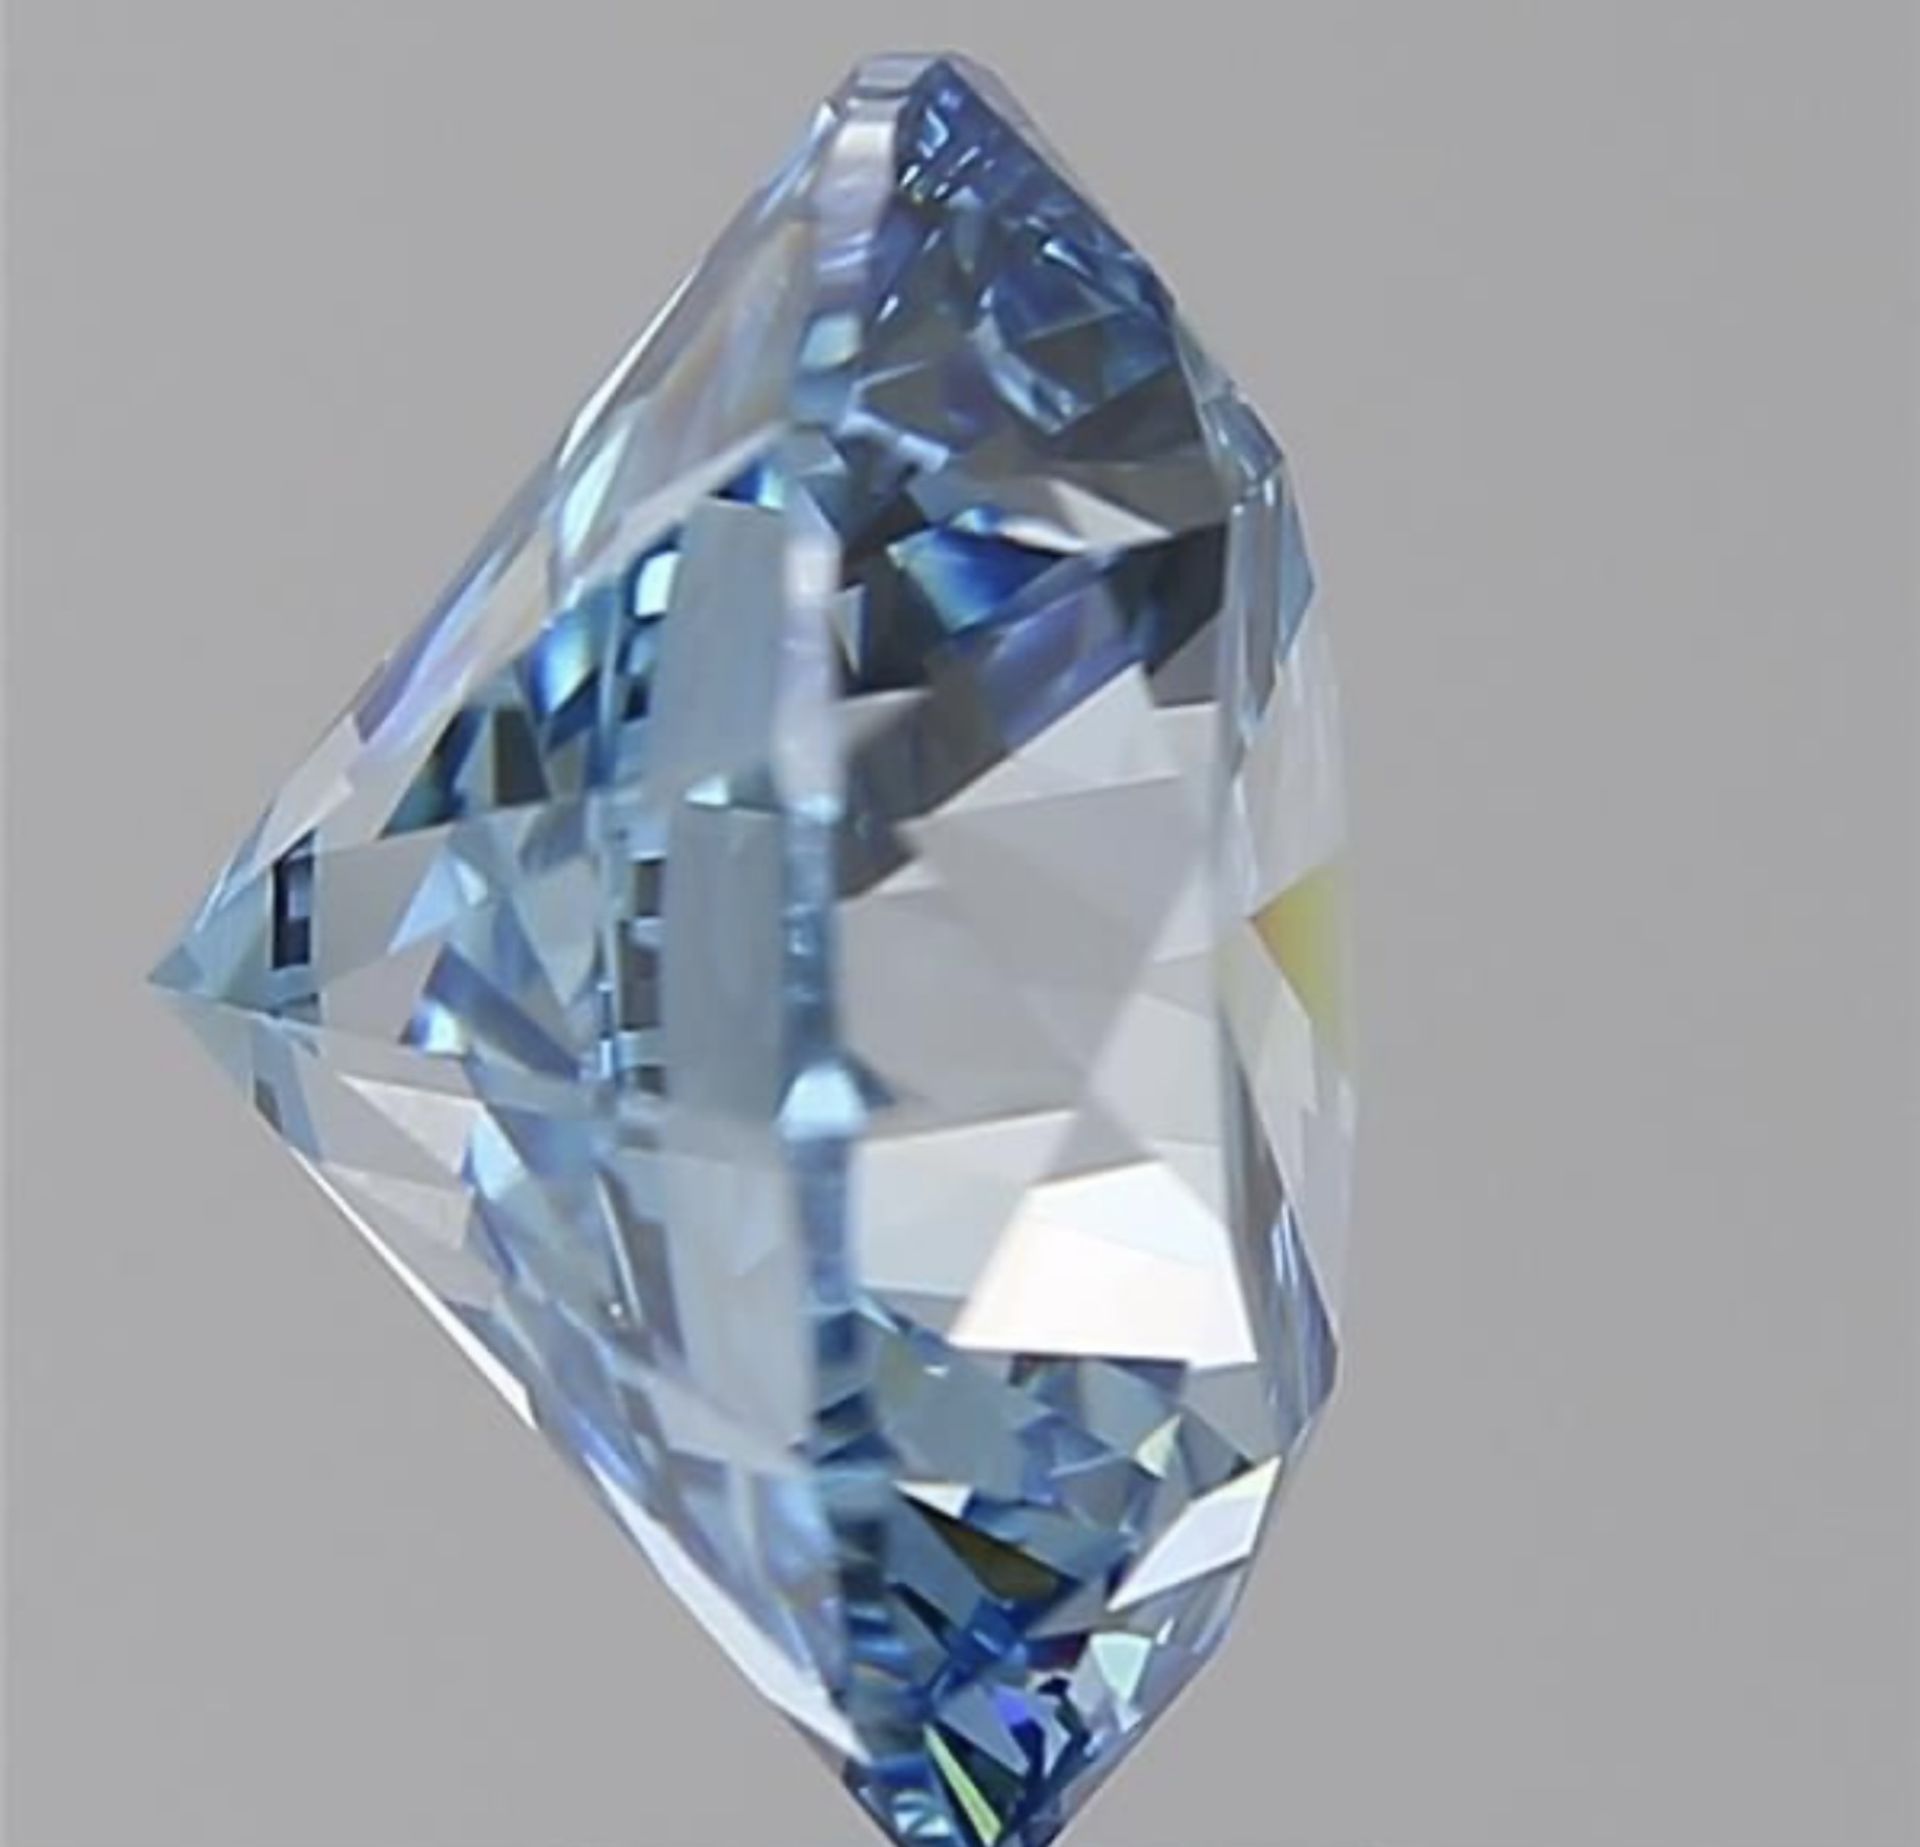 Round Brilliant Cut Diamond 5.01 Carat Fancy Blue Colour VVS2 Clarity - IGI Certificate - Image 5 of 9